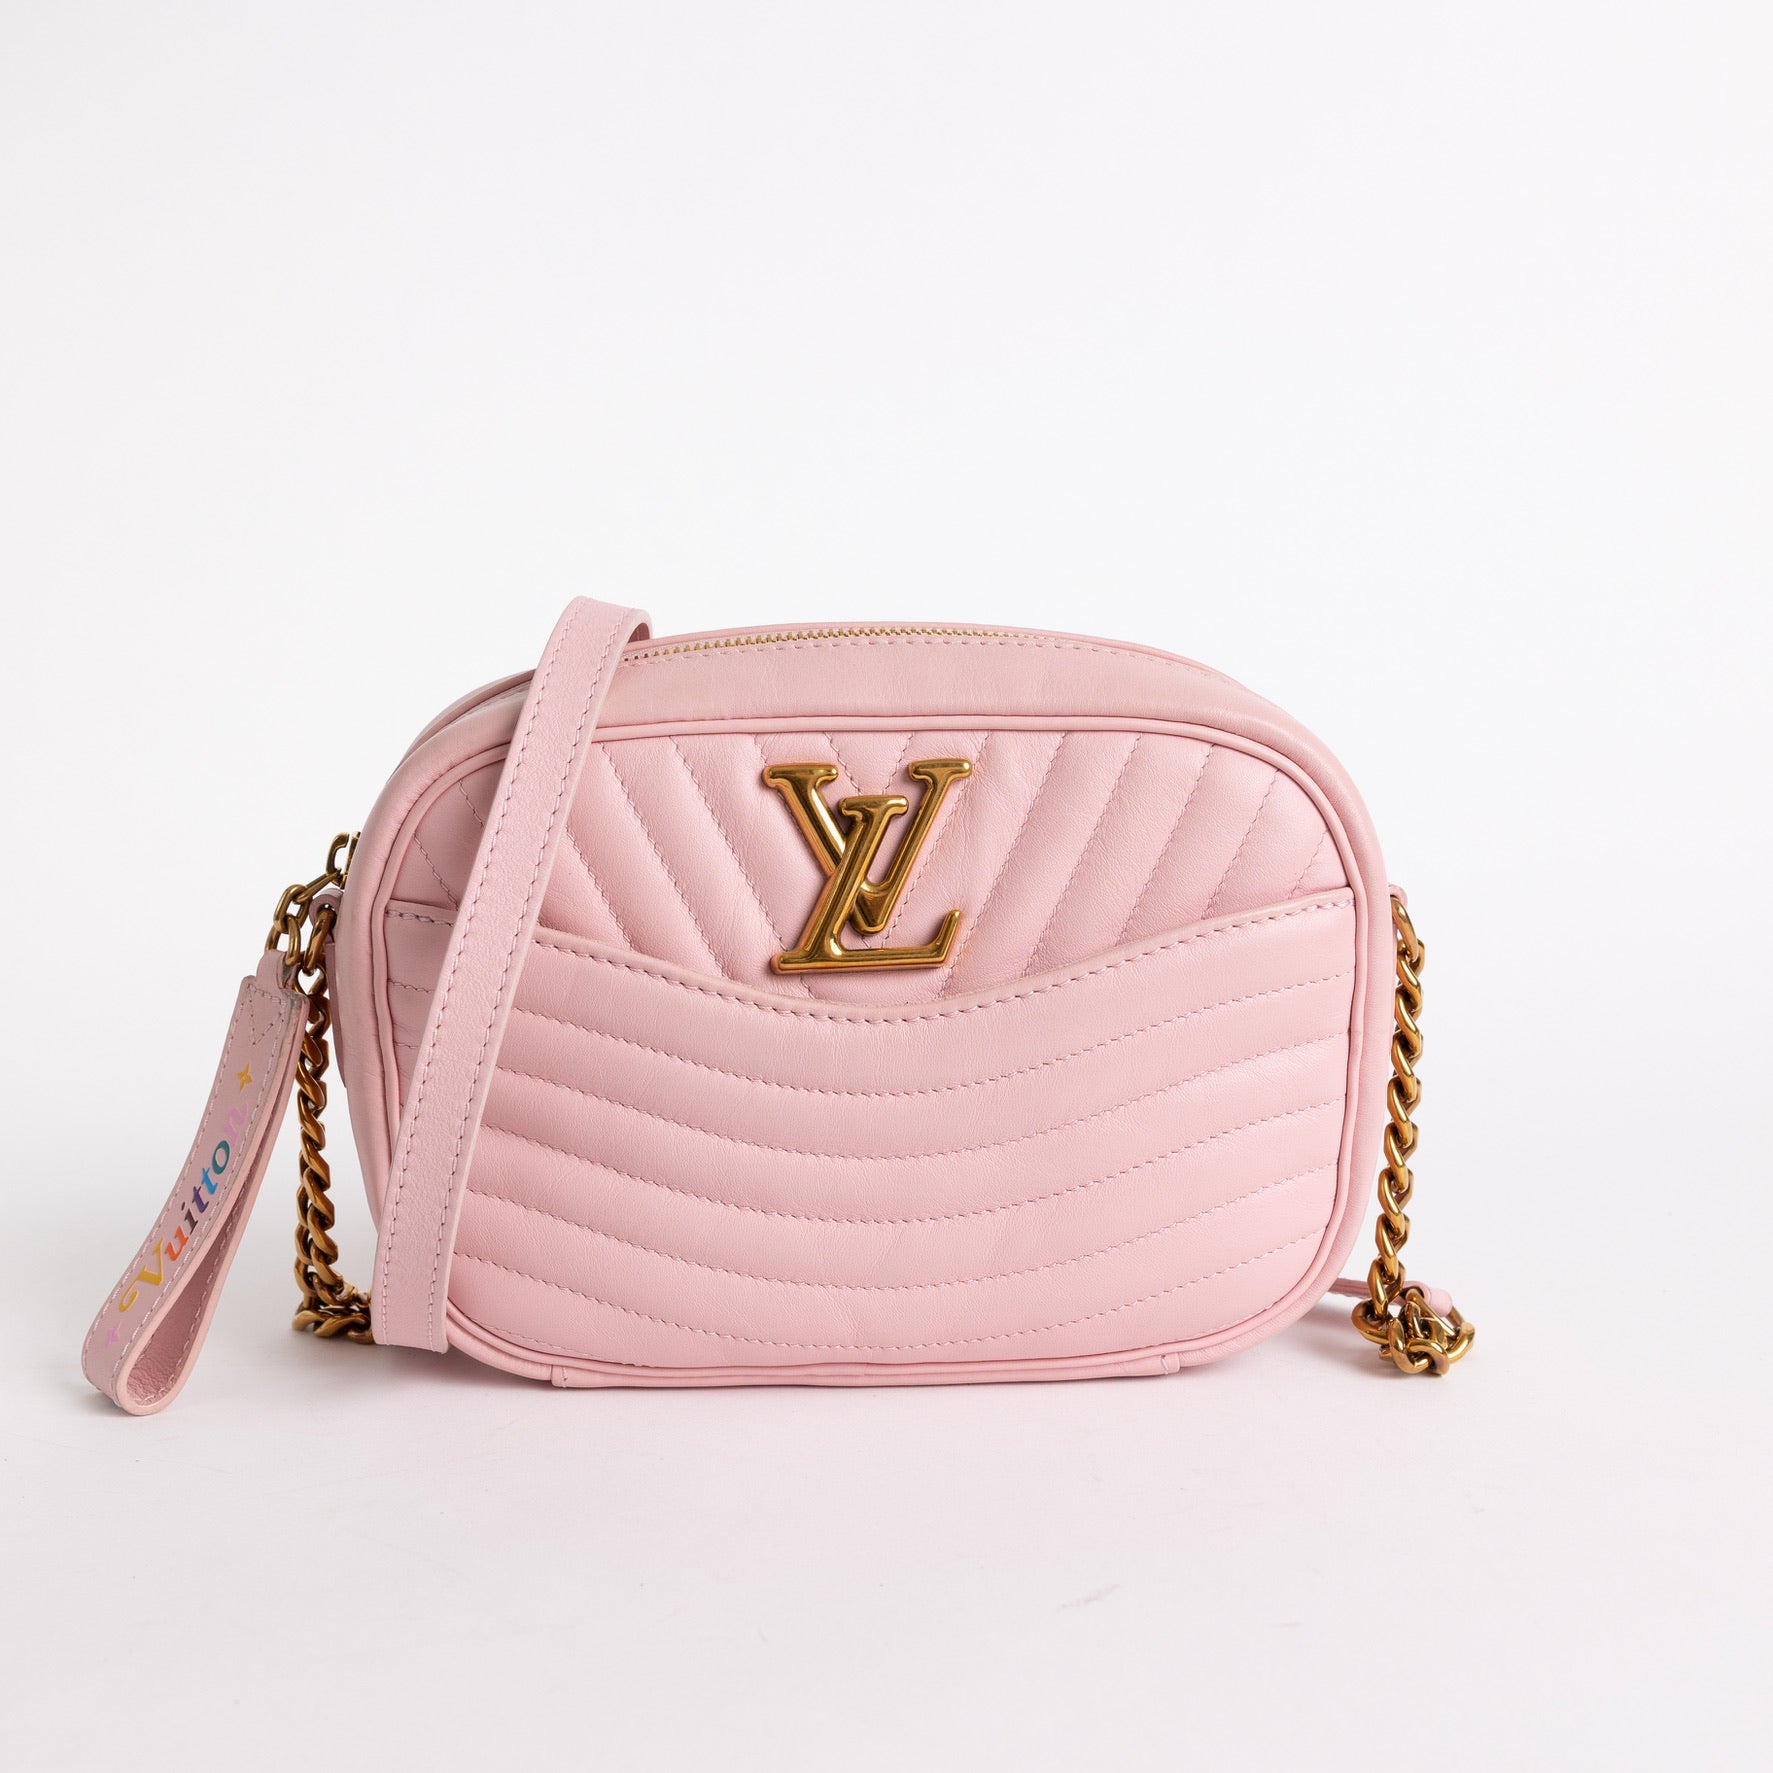 Louis Vuitton Louis Vuitton New Wave Camera Bag